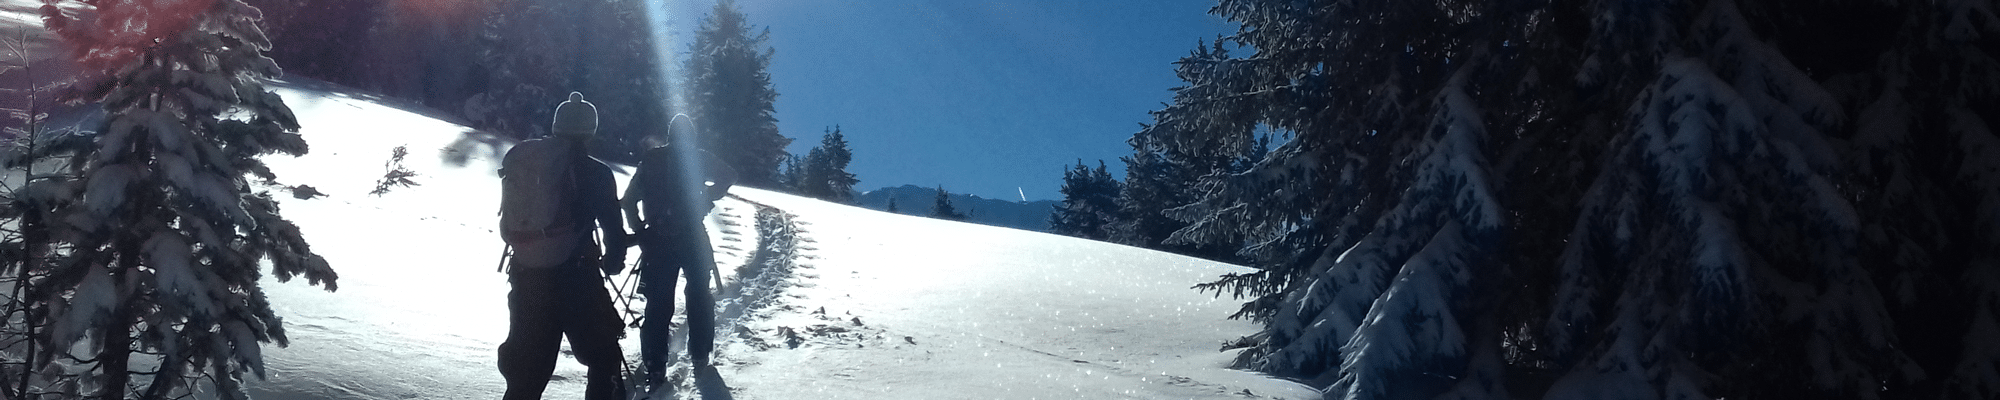 Maurienne winter ski